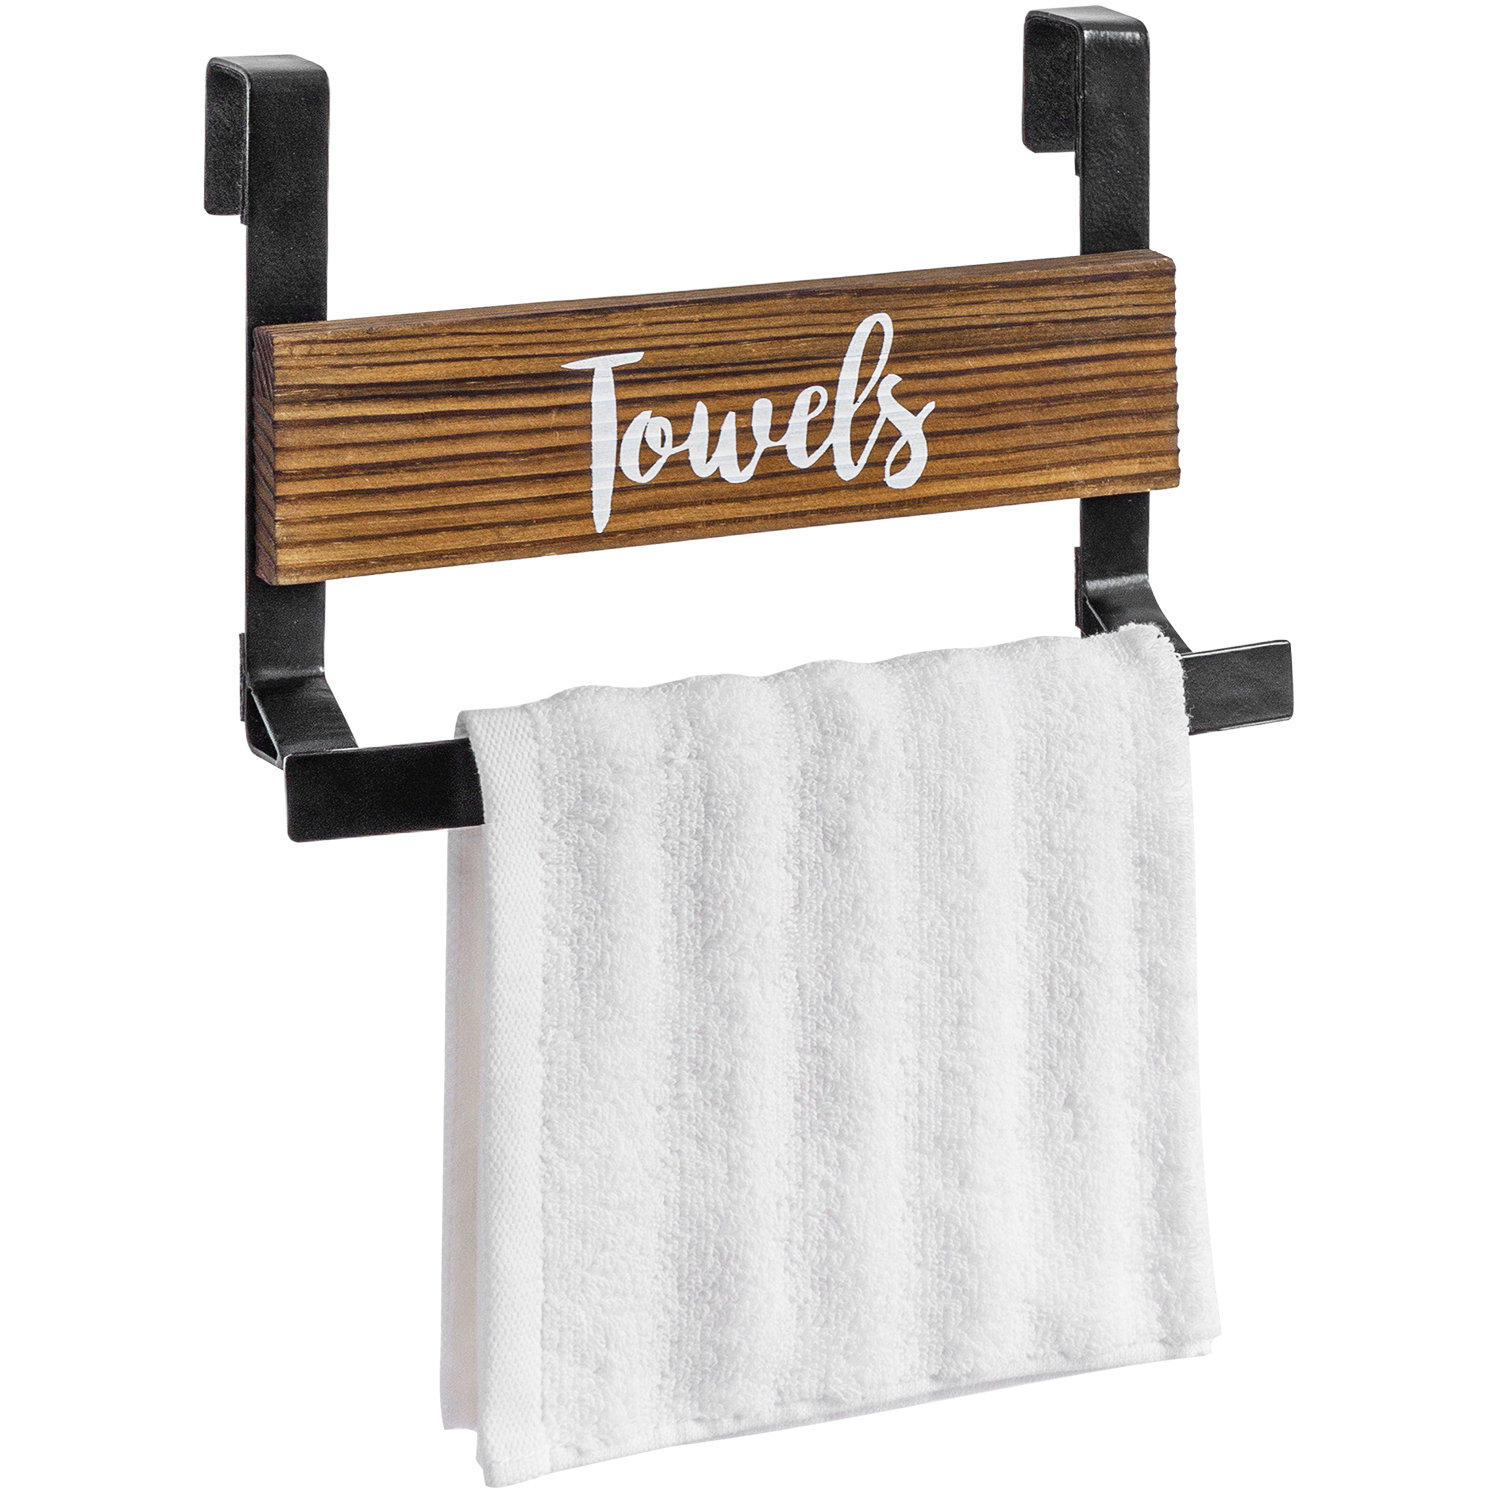 Nickel Paper Towel Holder - Threshold™ : Target